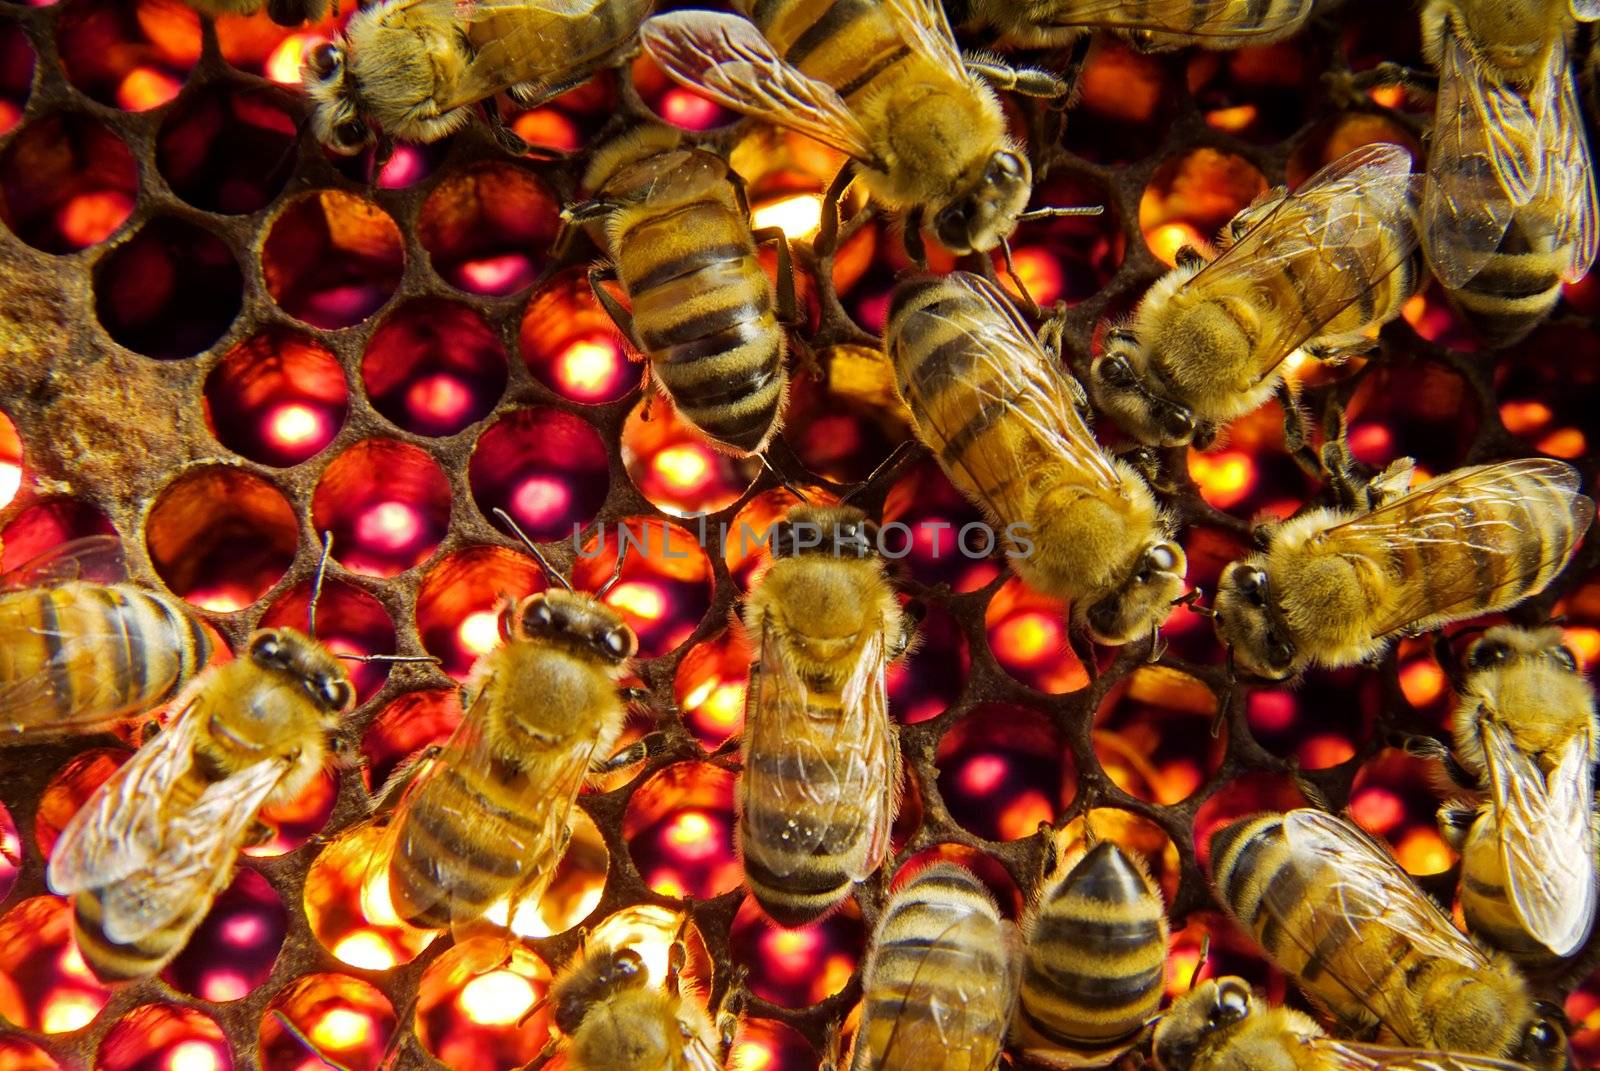 Bees inside  beehive by noam